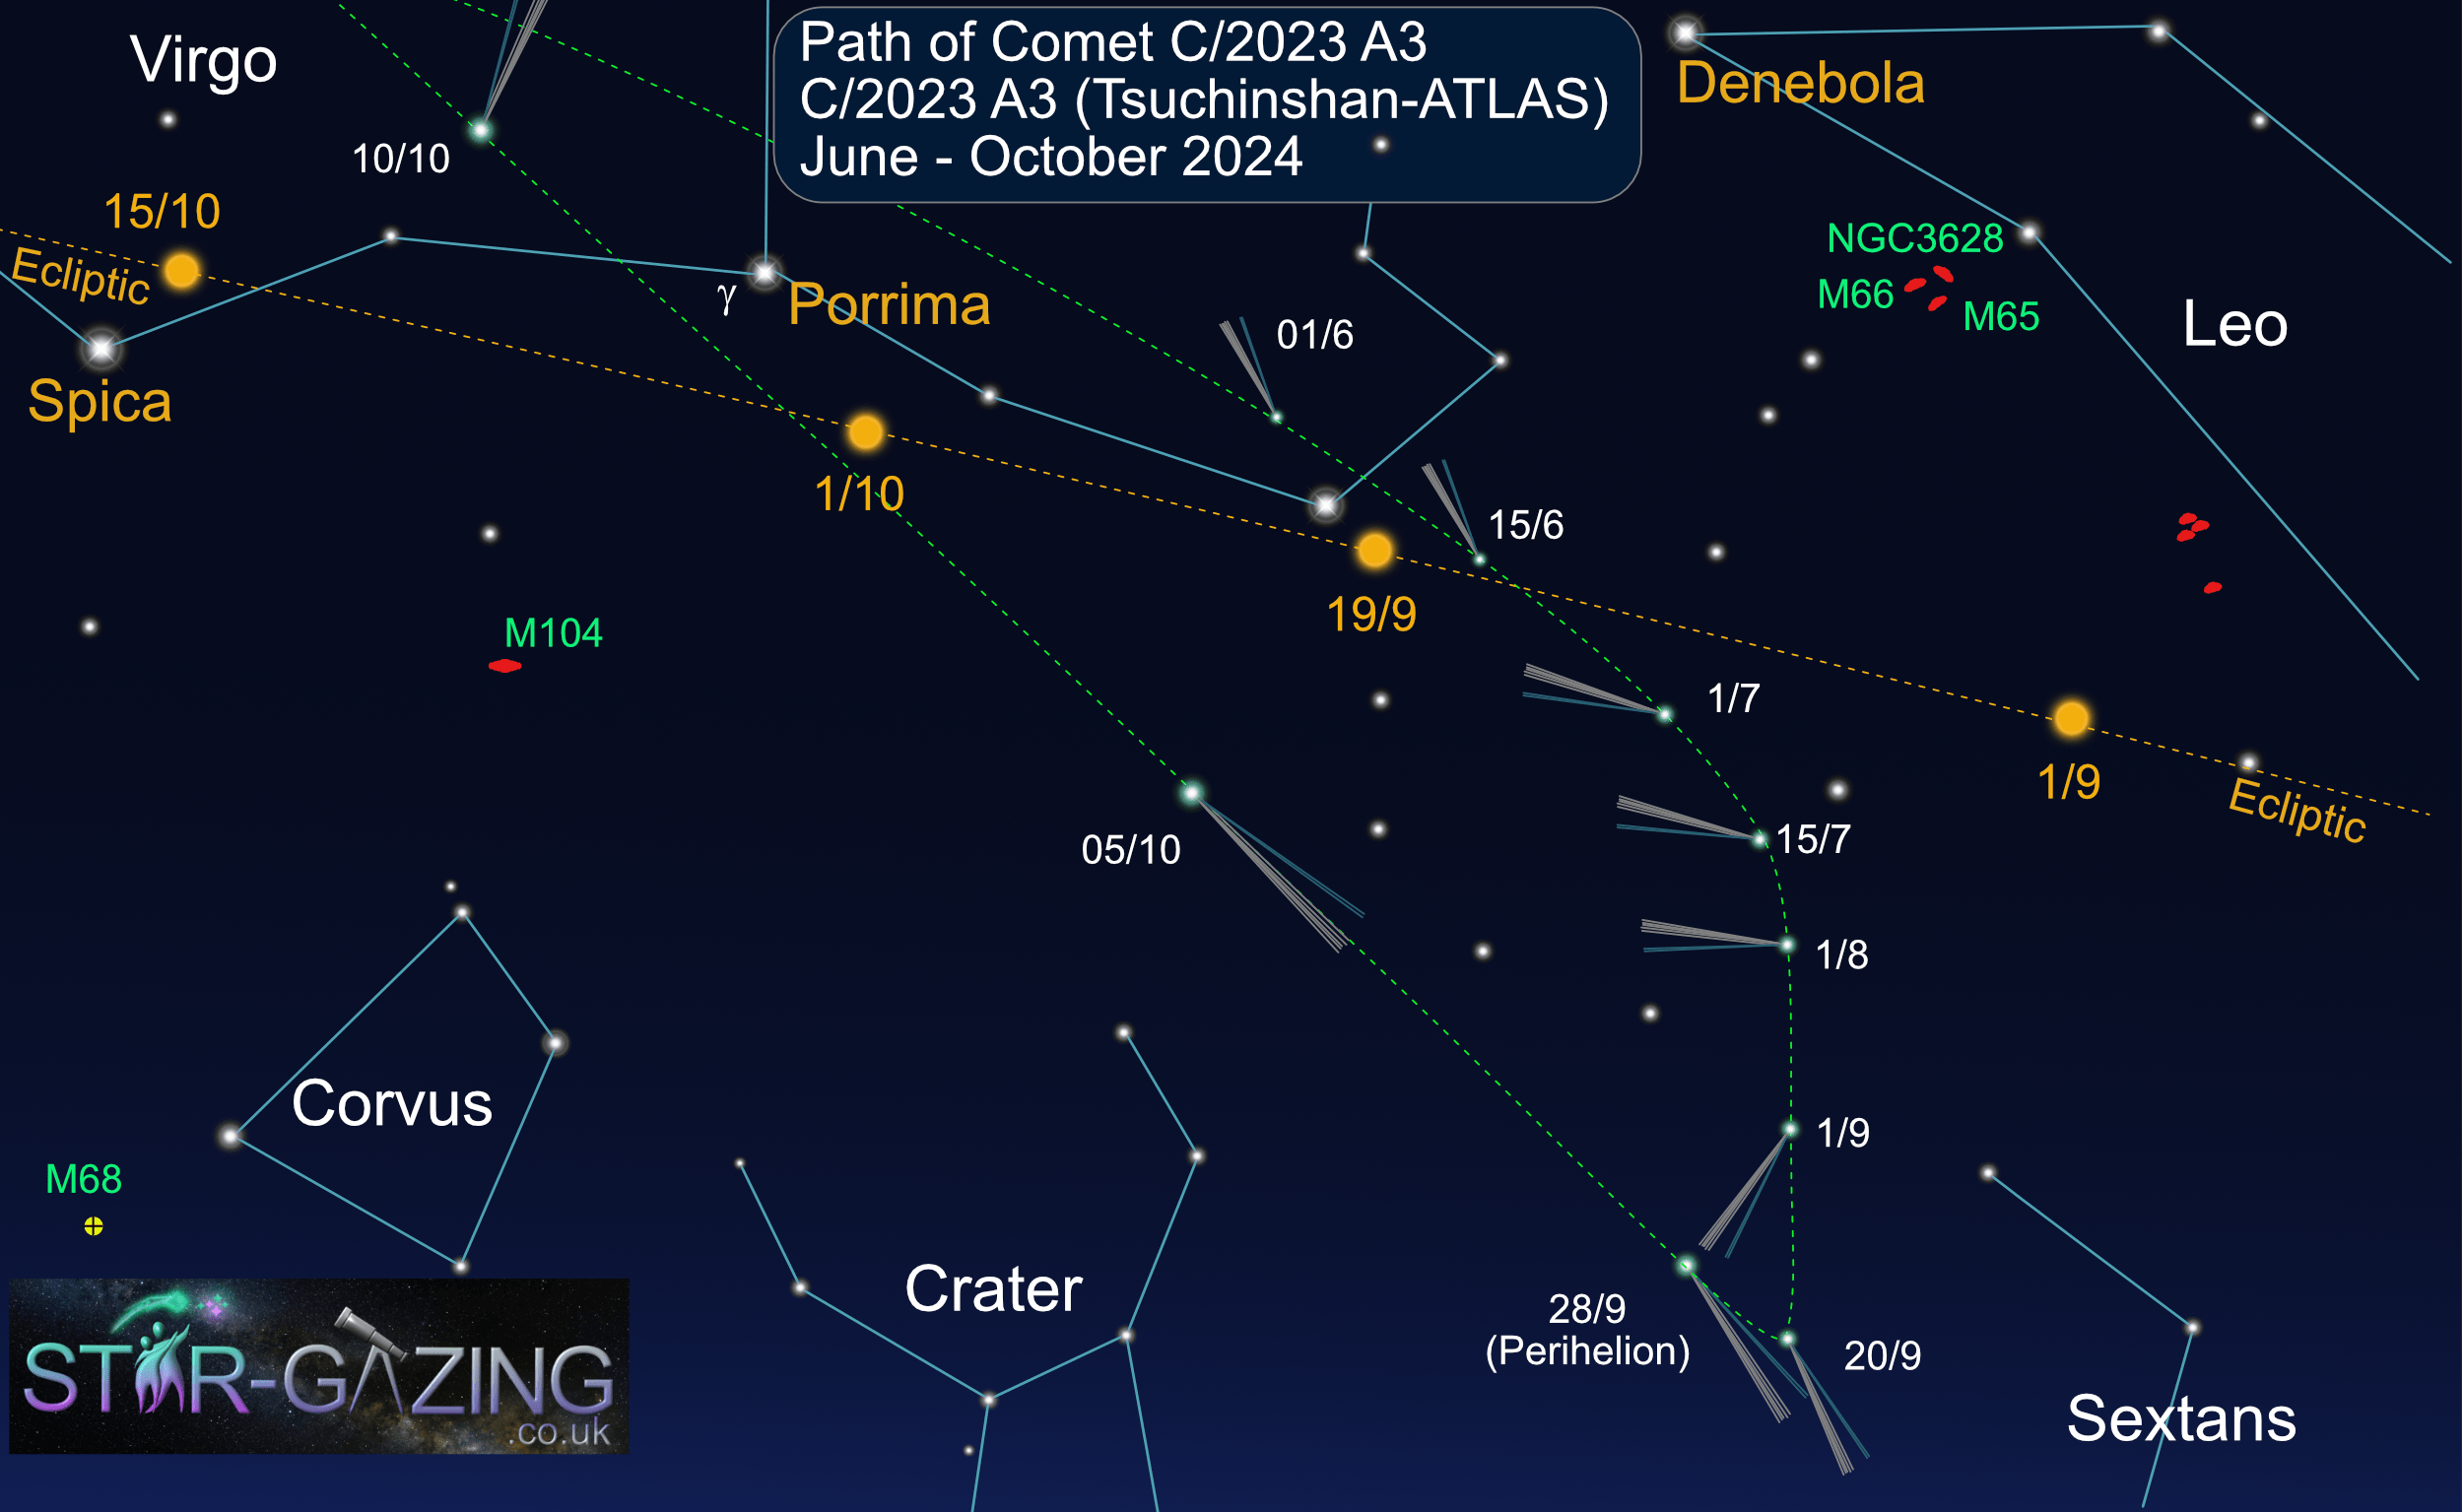 Comet C/2023 A3 (Tsuchinsan-ATLAS) – Star-Gazing